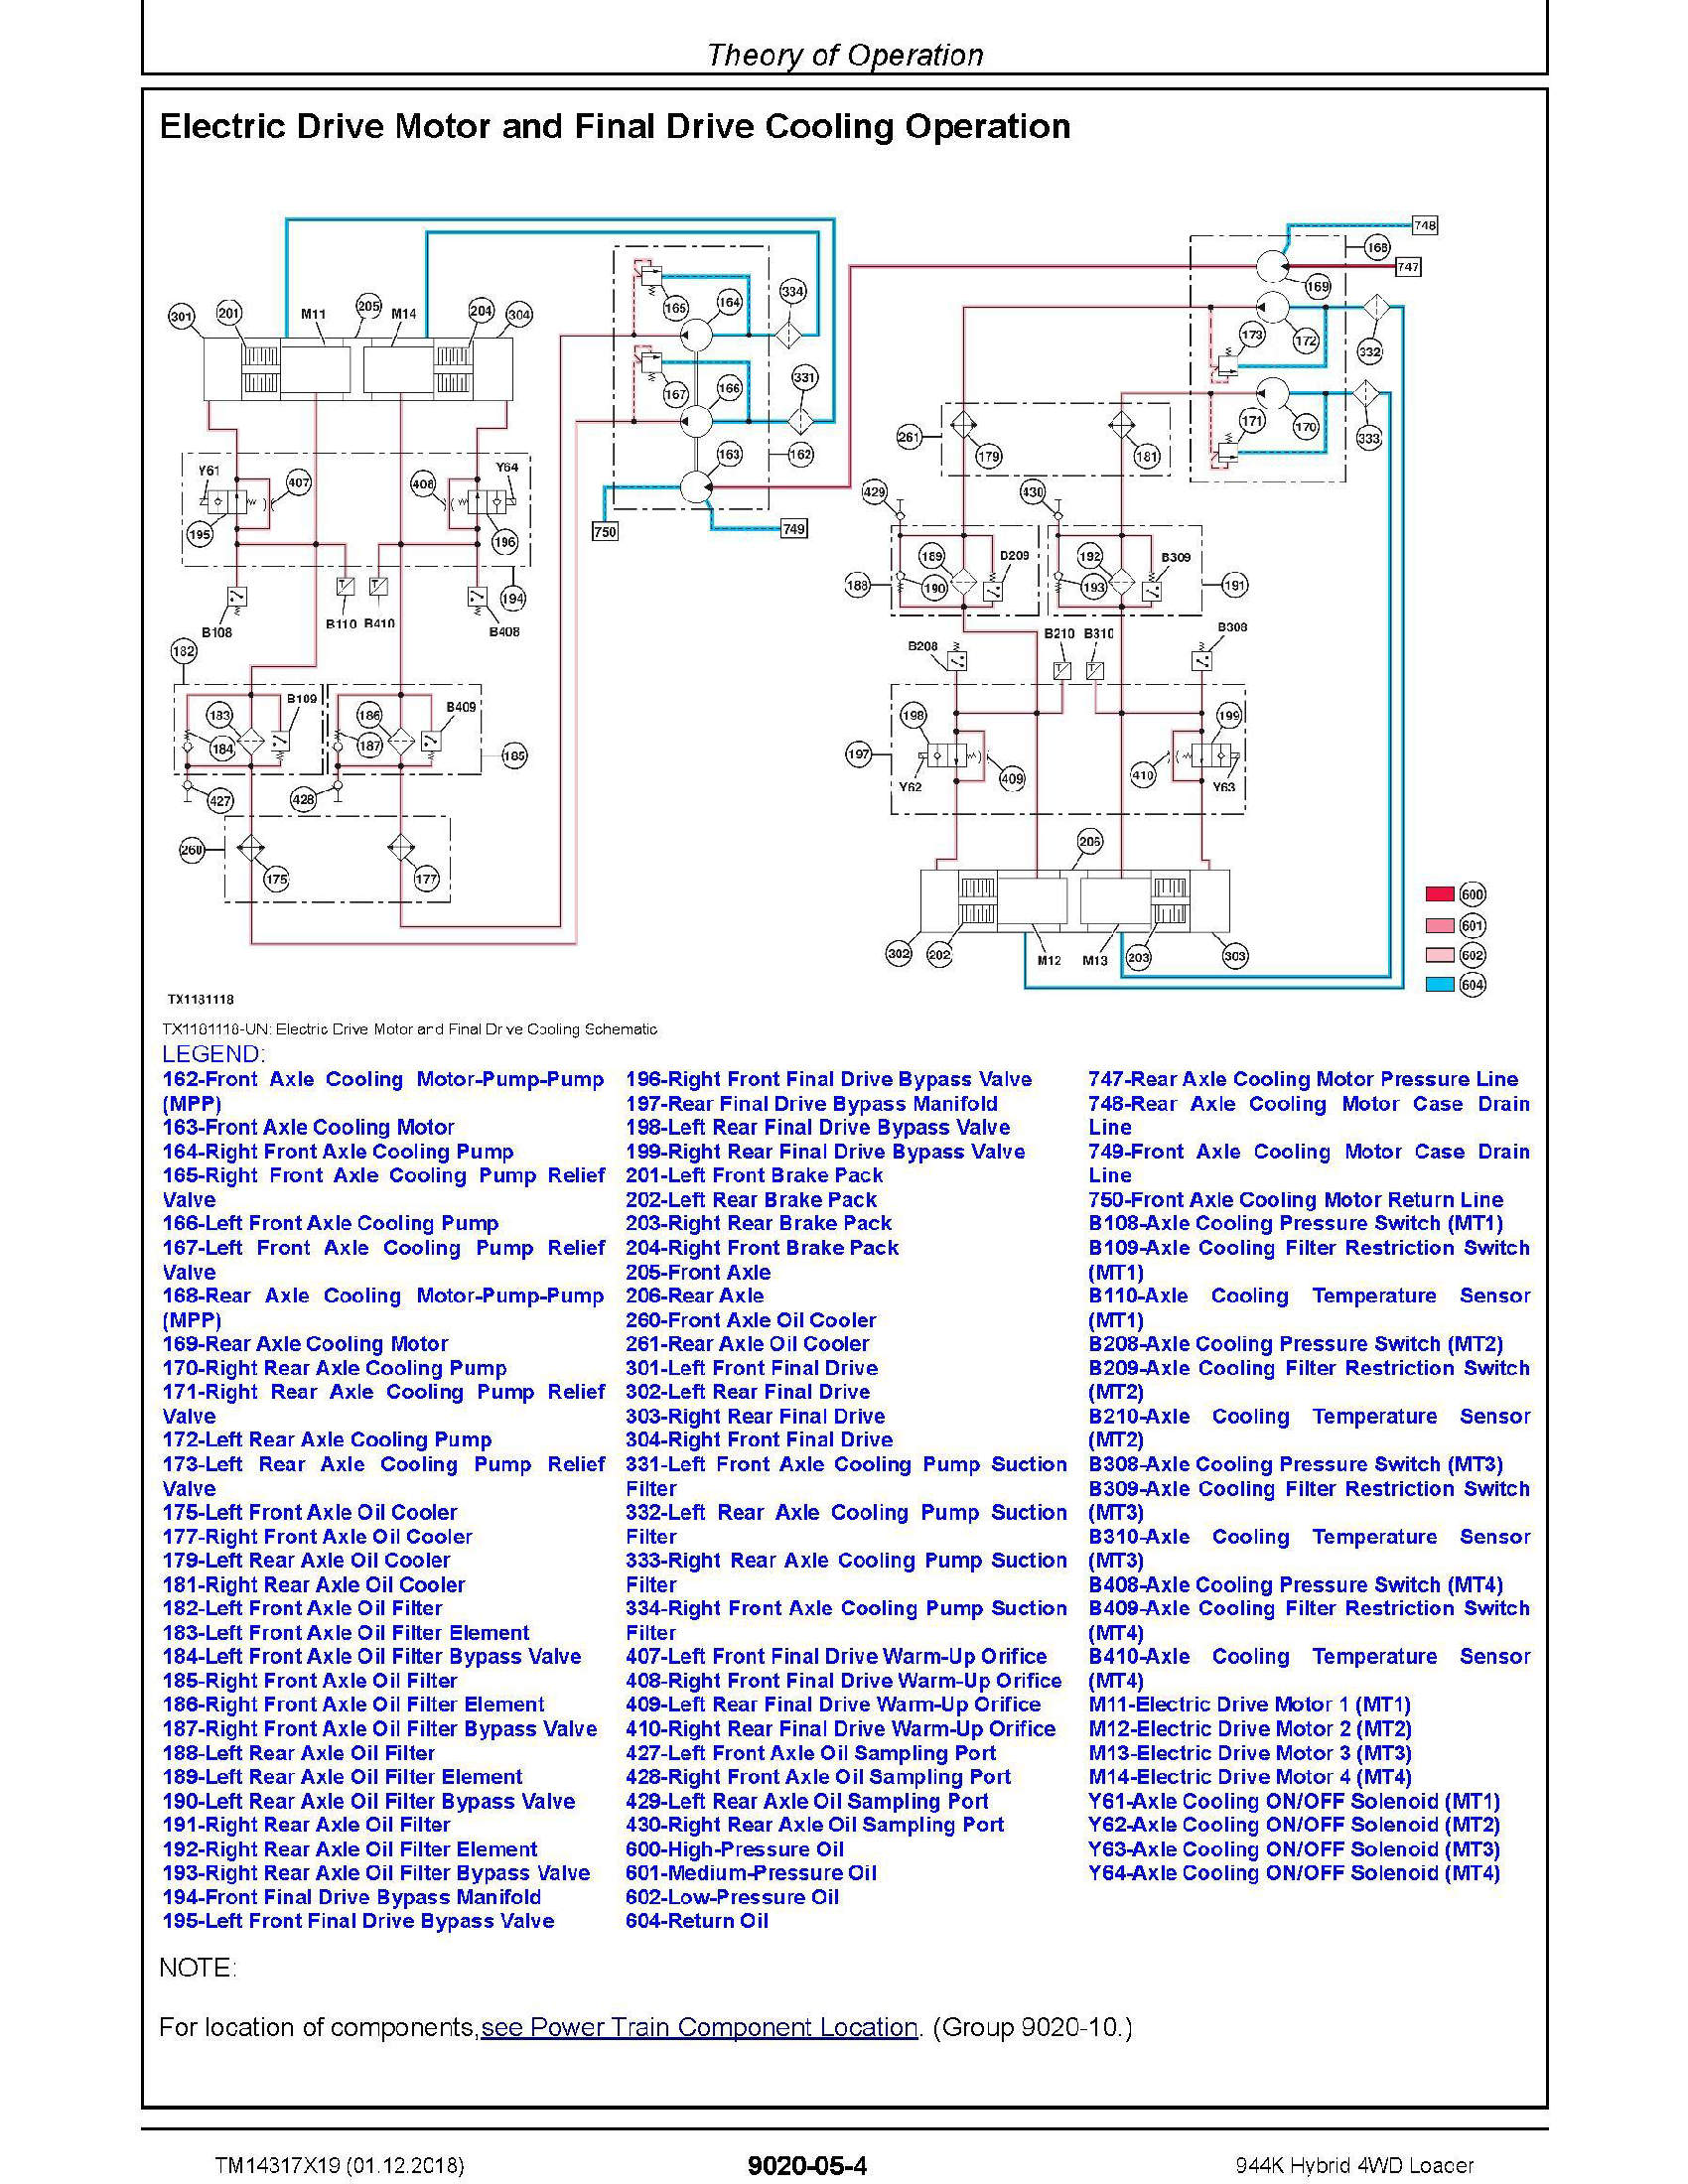 John Deere 1T0332G manual pdf